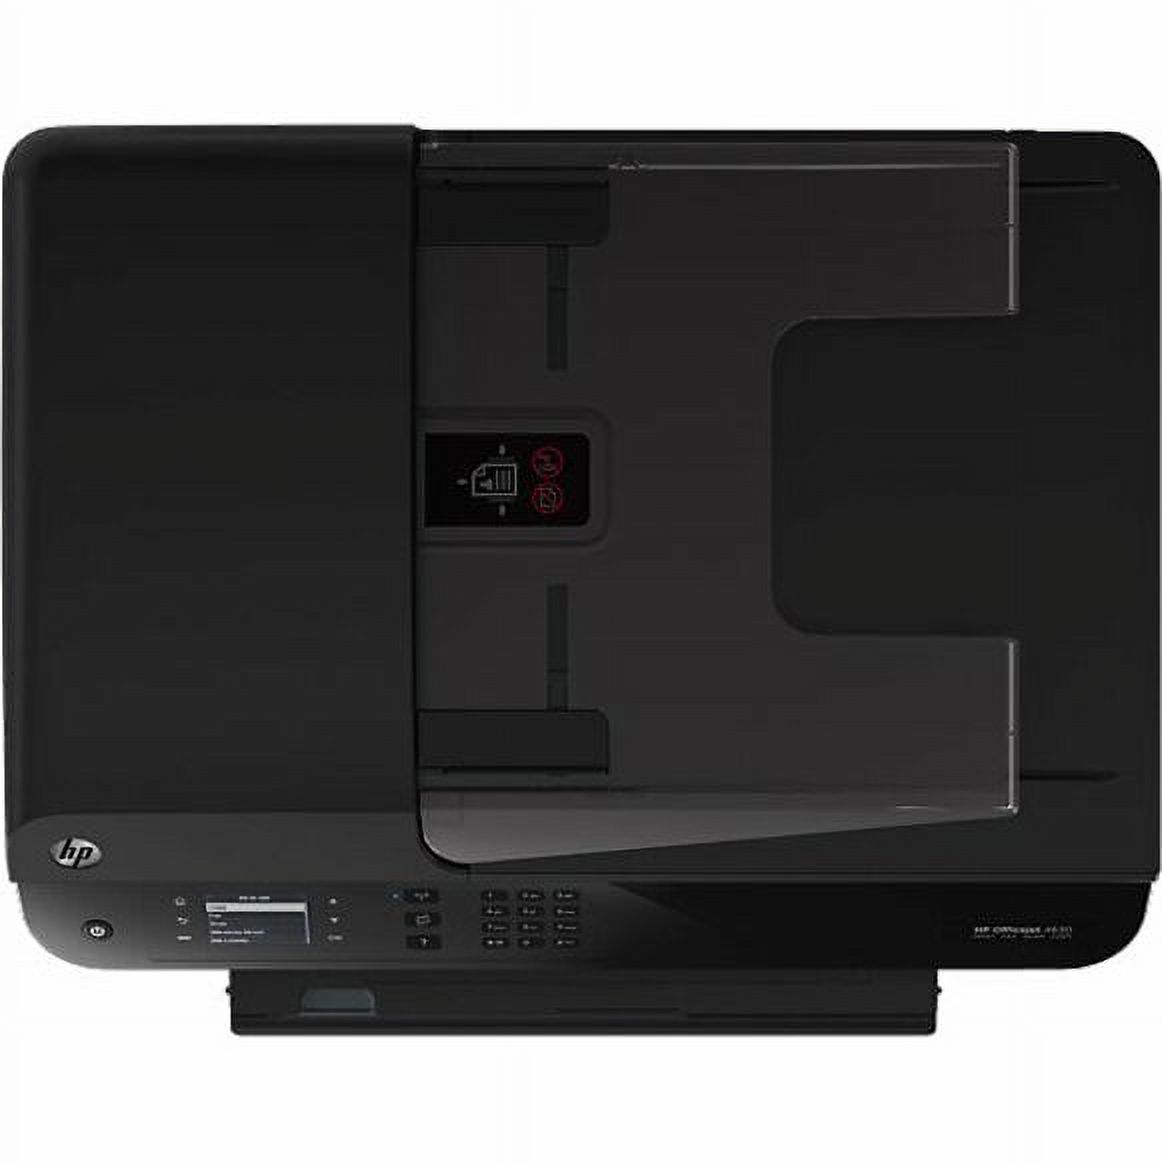 HP Officejet 4630 Wireless Inkjet Multifunction Printer, Color - image 5 of 7